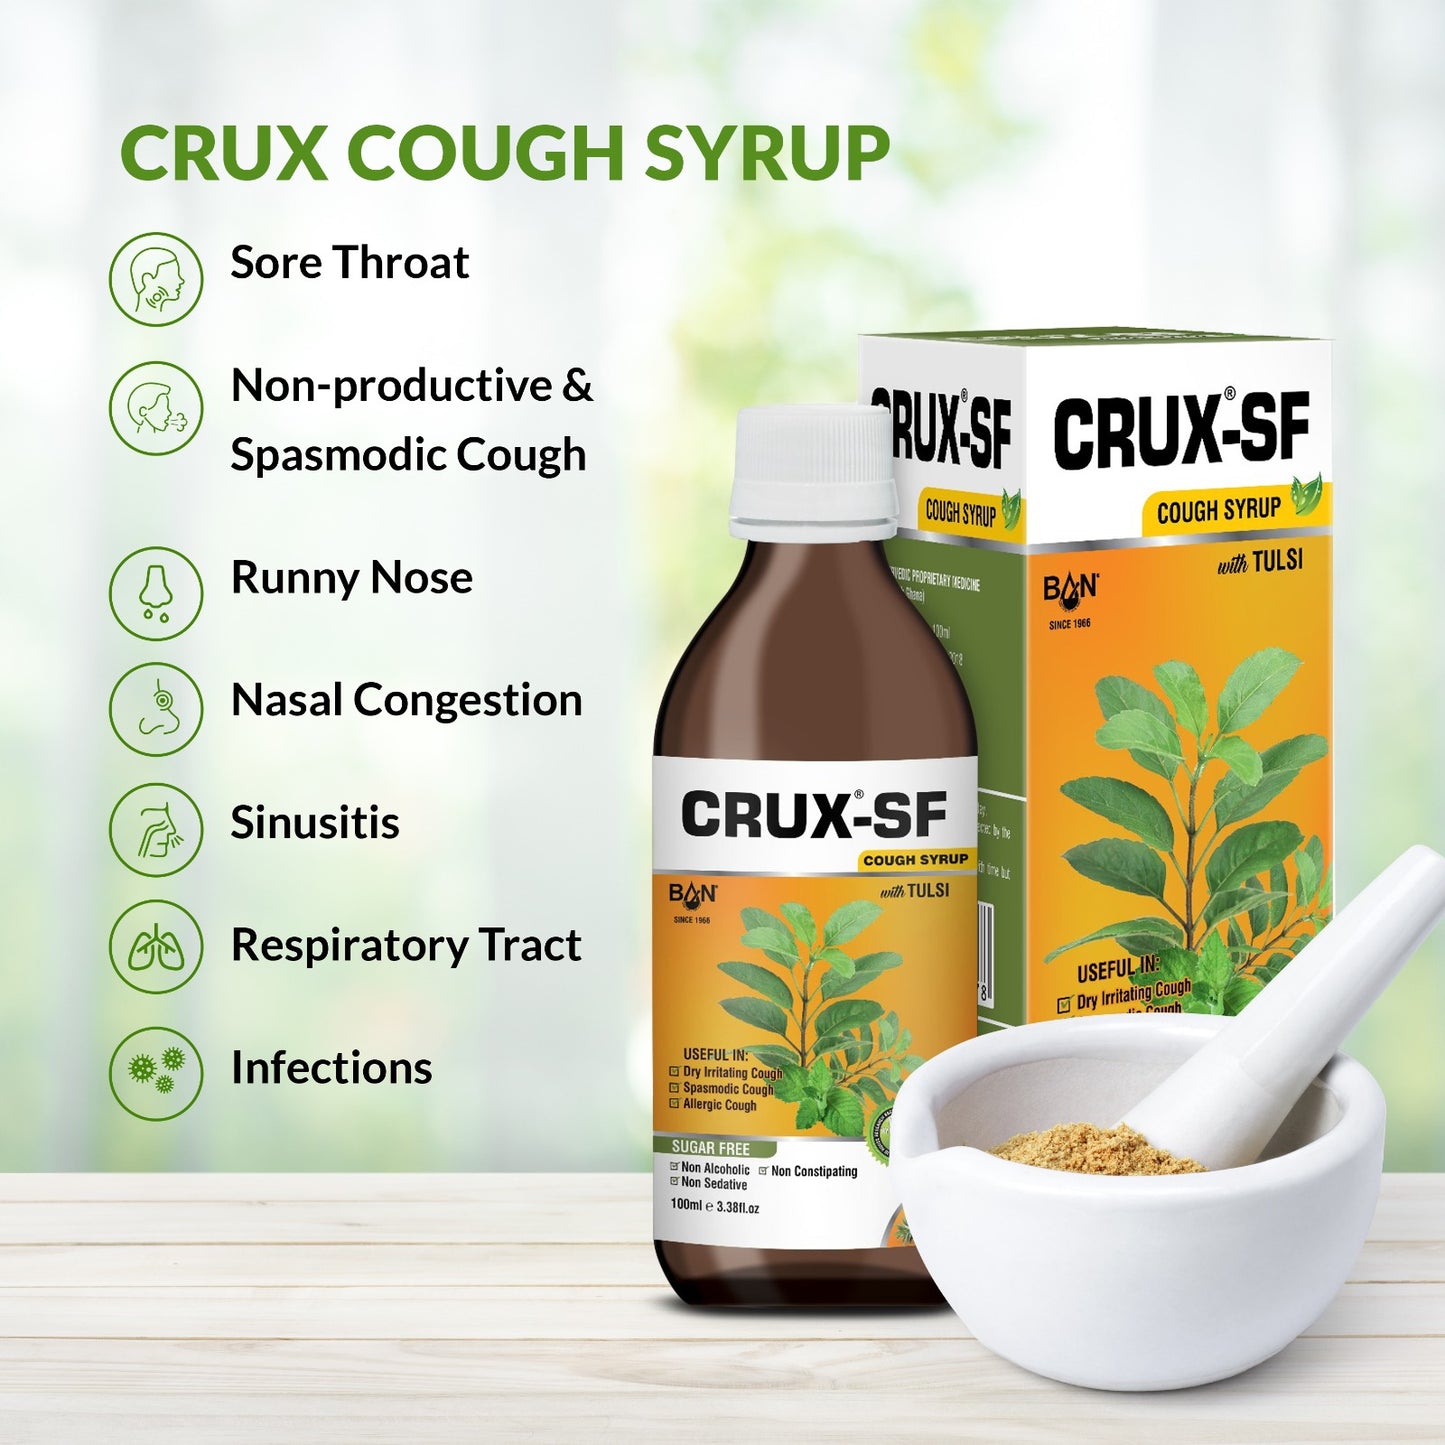 Sugar-Free Ayurvedic Cough Relief Syrup